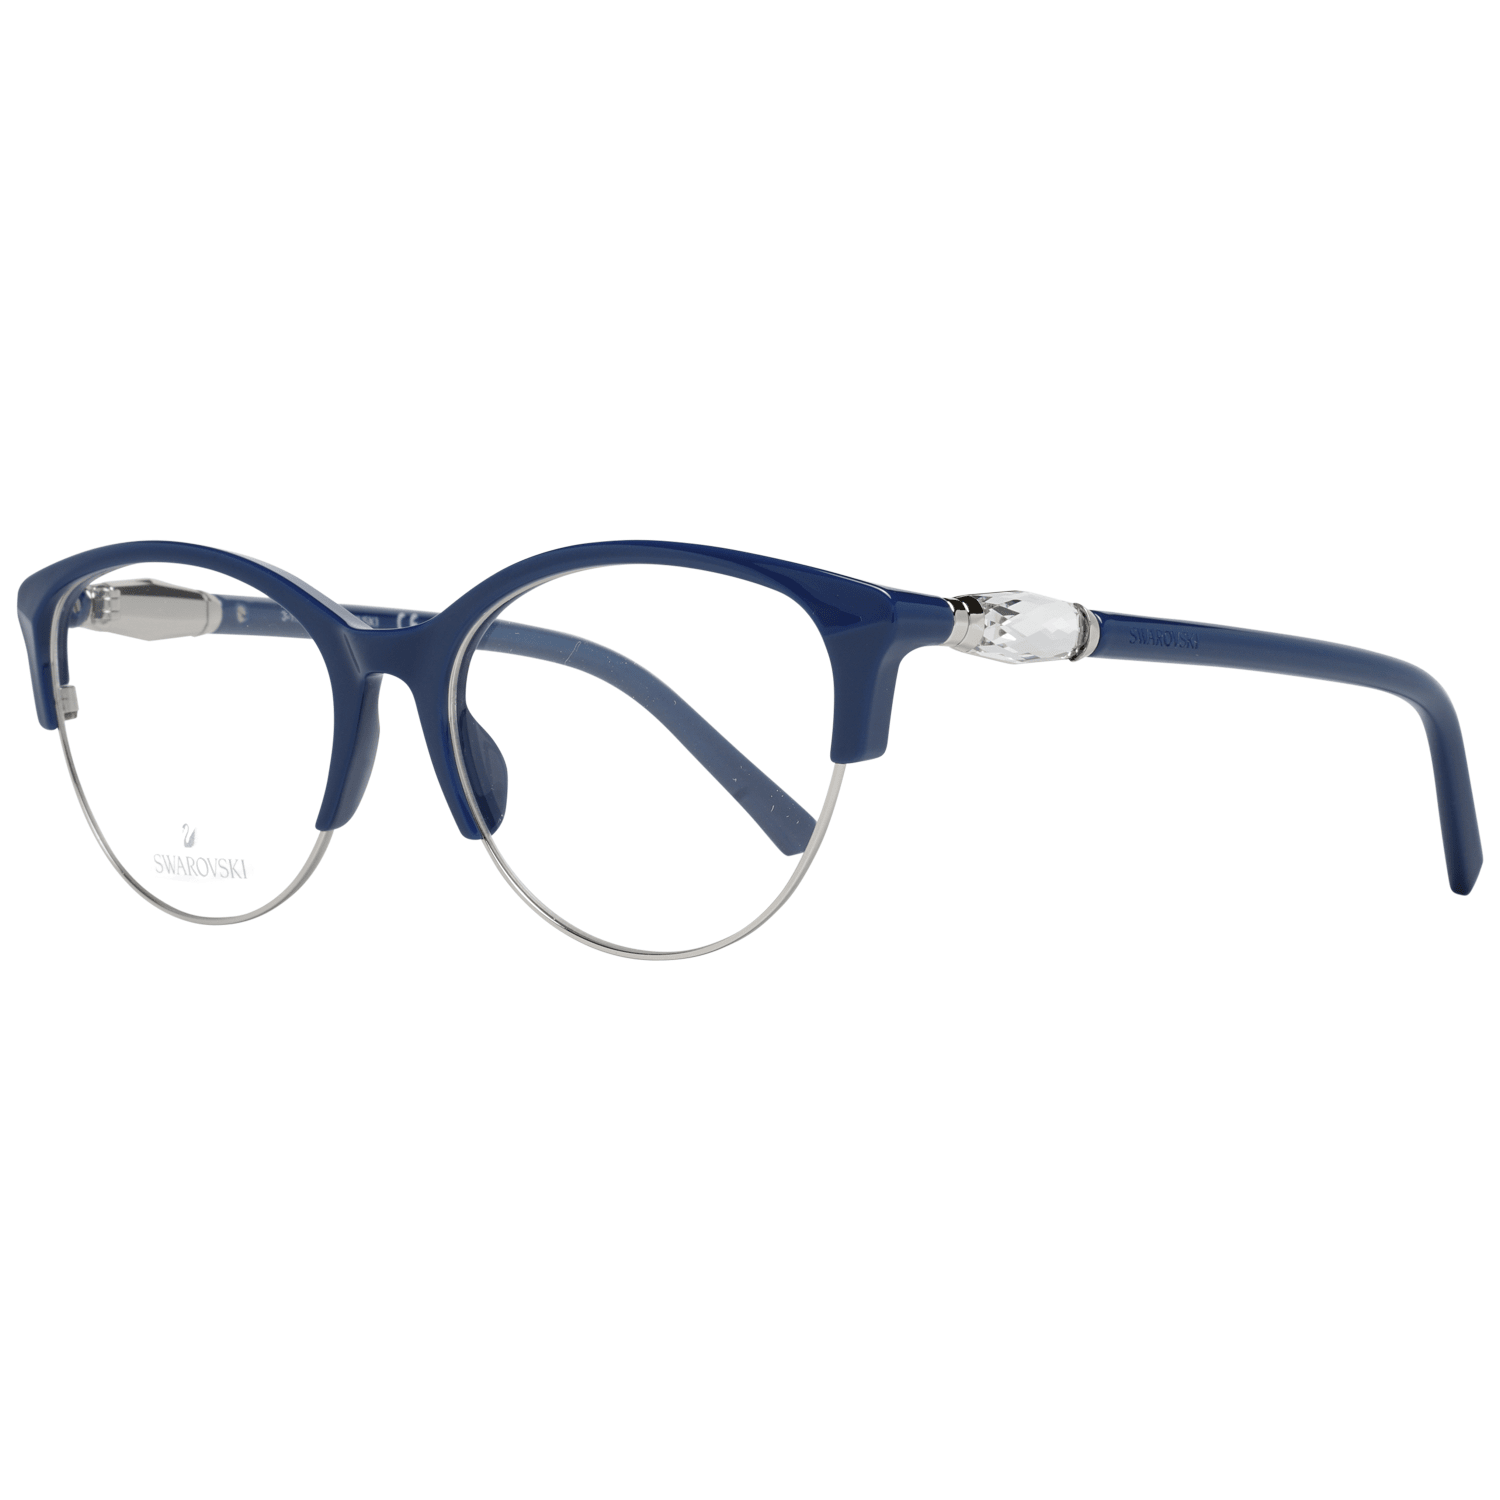 Swarovski Women's Optical Frames Eyewear Blue SK5338 53090